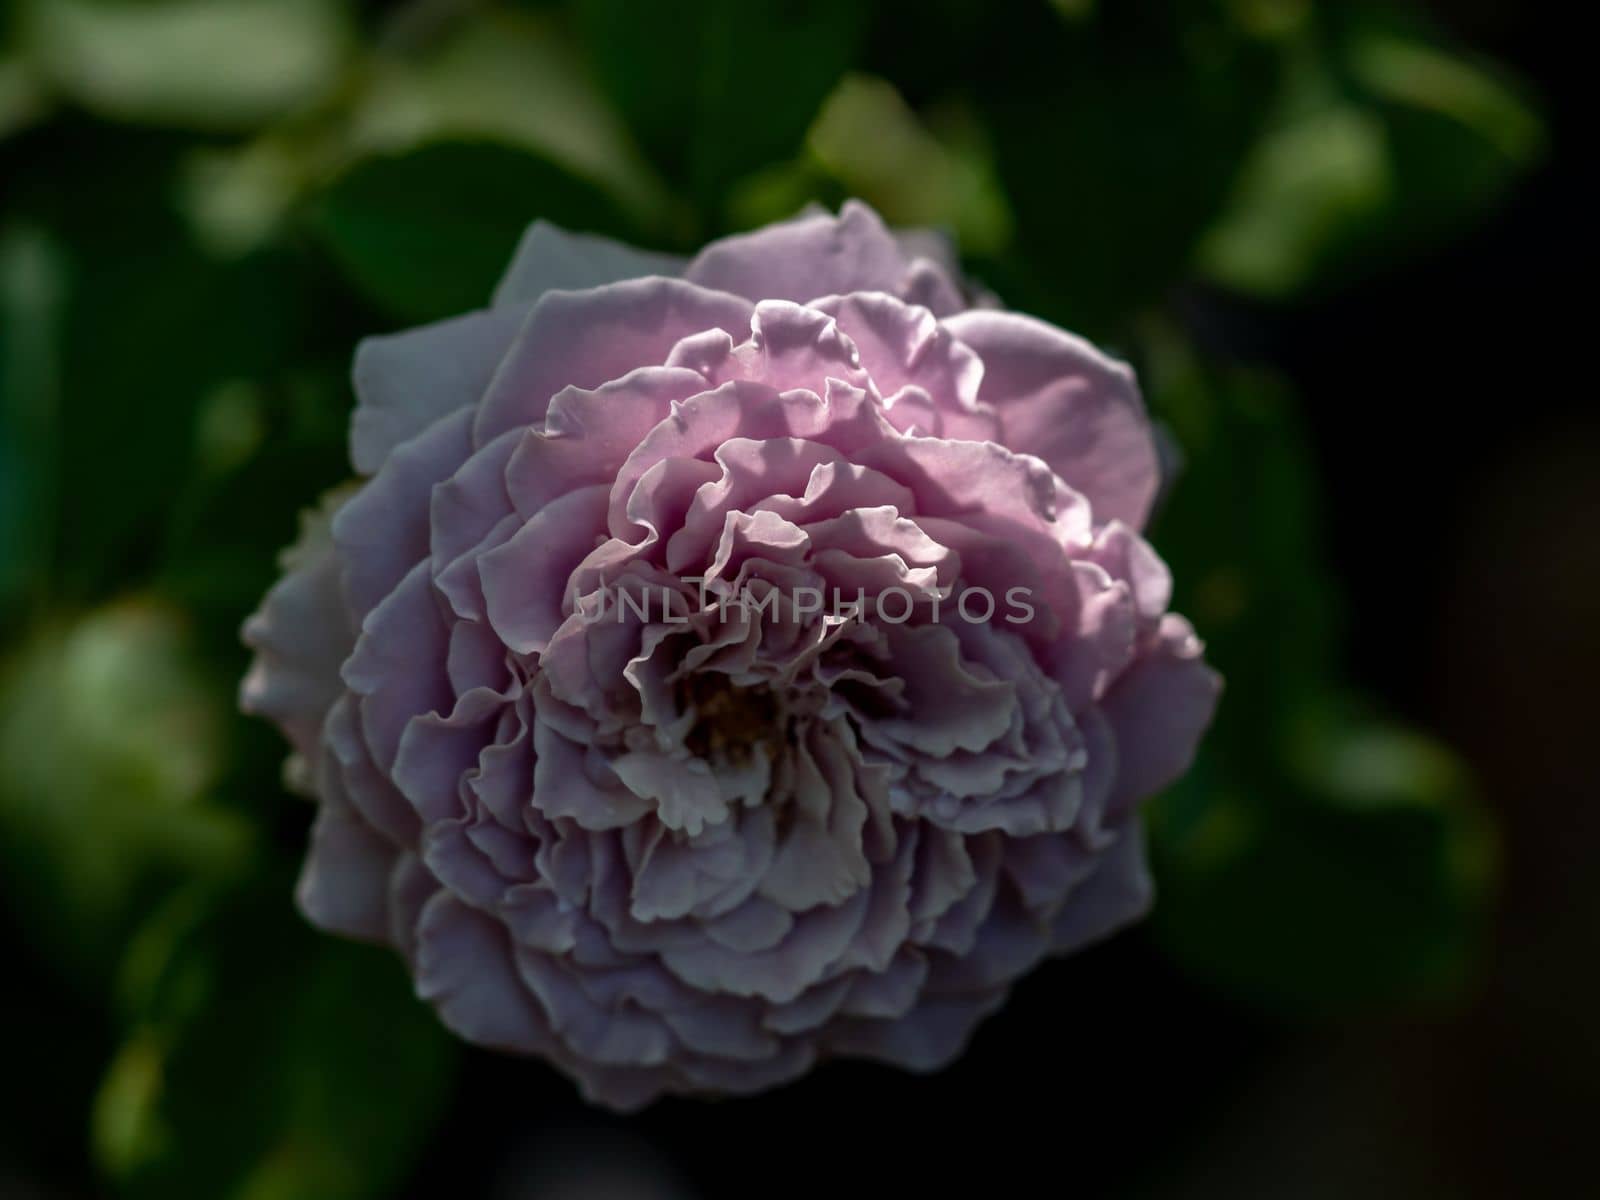 Shape and colors of Princess Kaori the Japanese garden rose